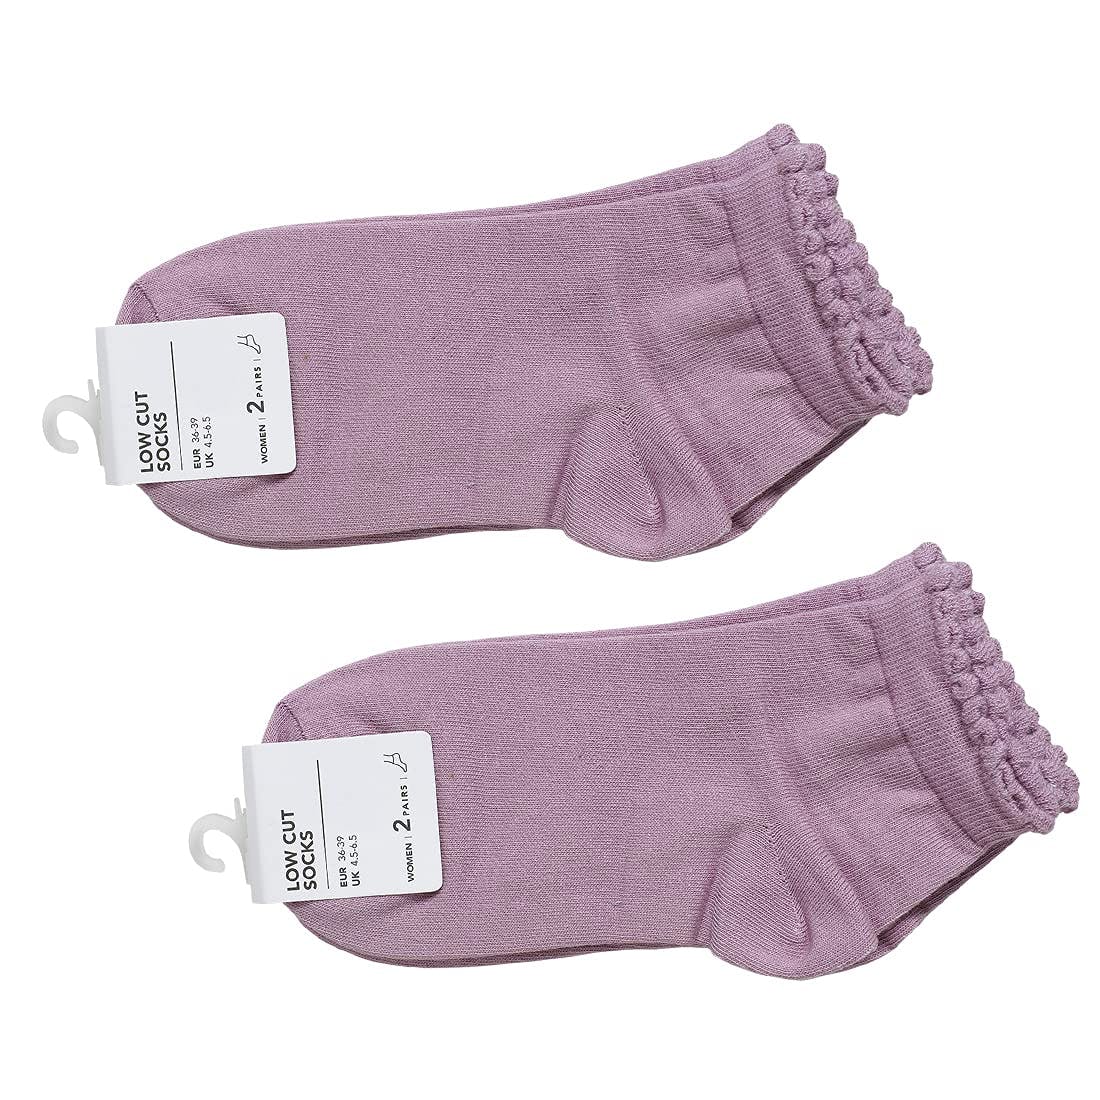 MINISO Women's Ruffle Cotton Low Cut Socks